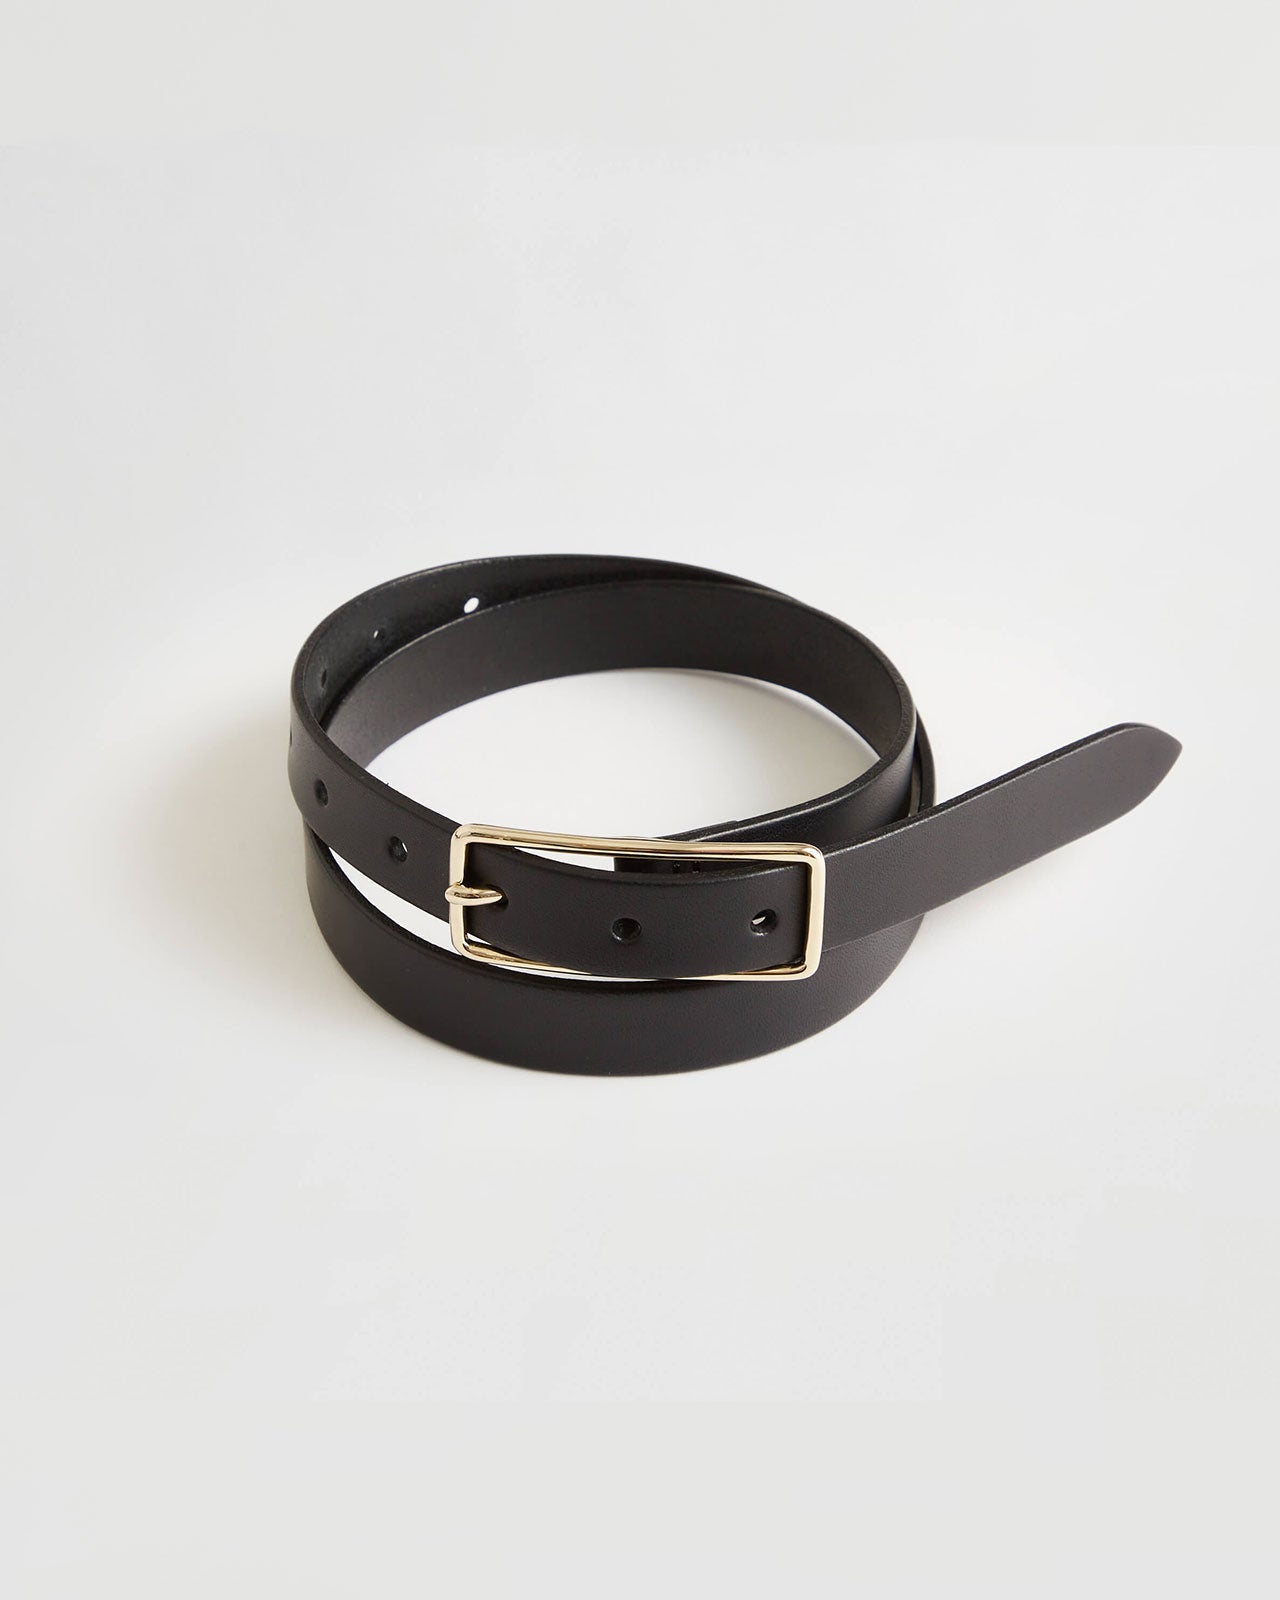 Slim trouser leather belt black grain – TOTEME